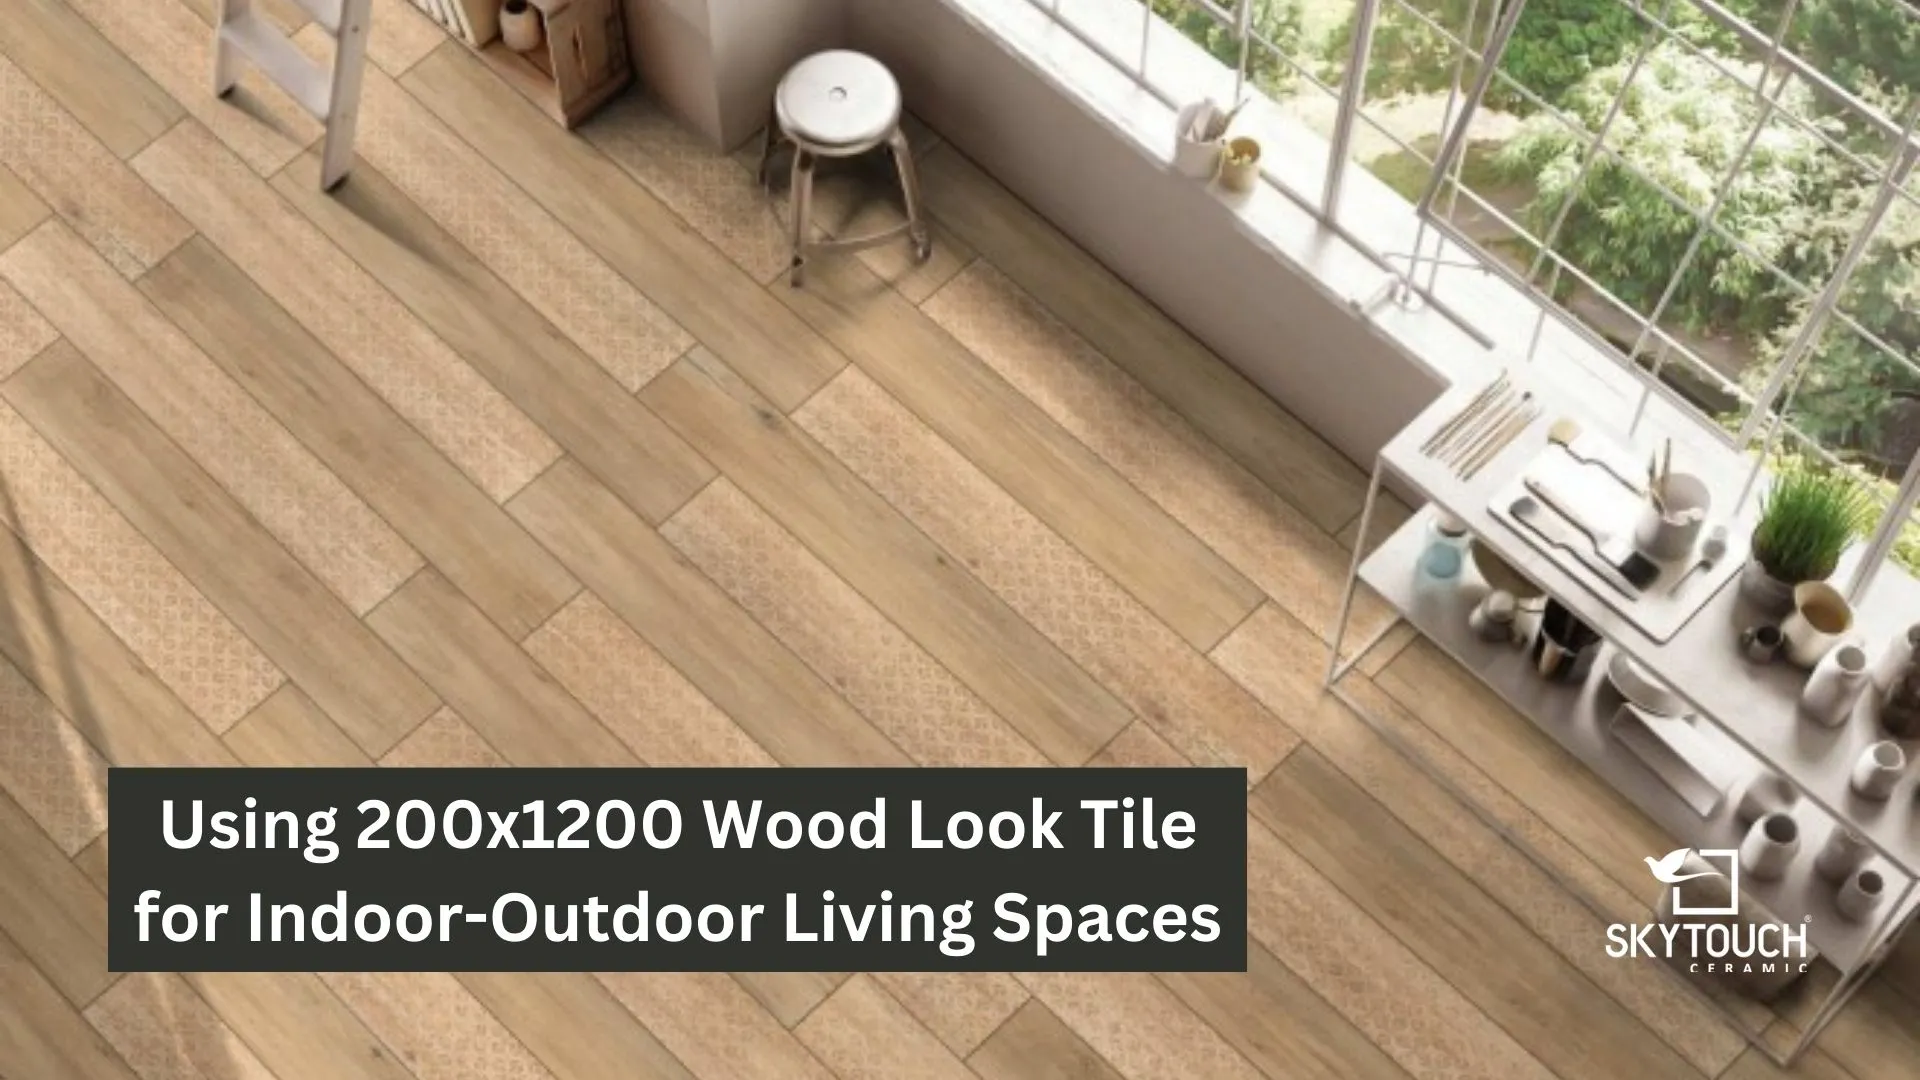 Using 200x1200 Wood Look Tile for Indoor-Outdoor Living Spaces